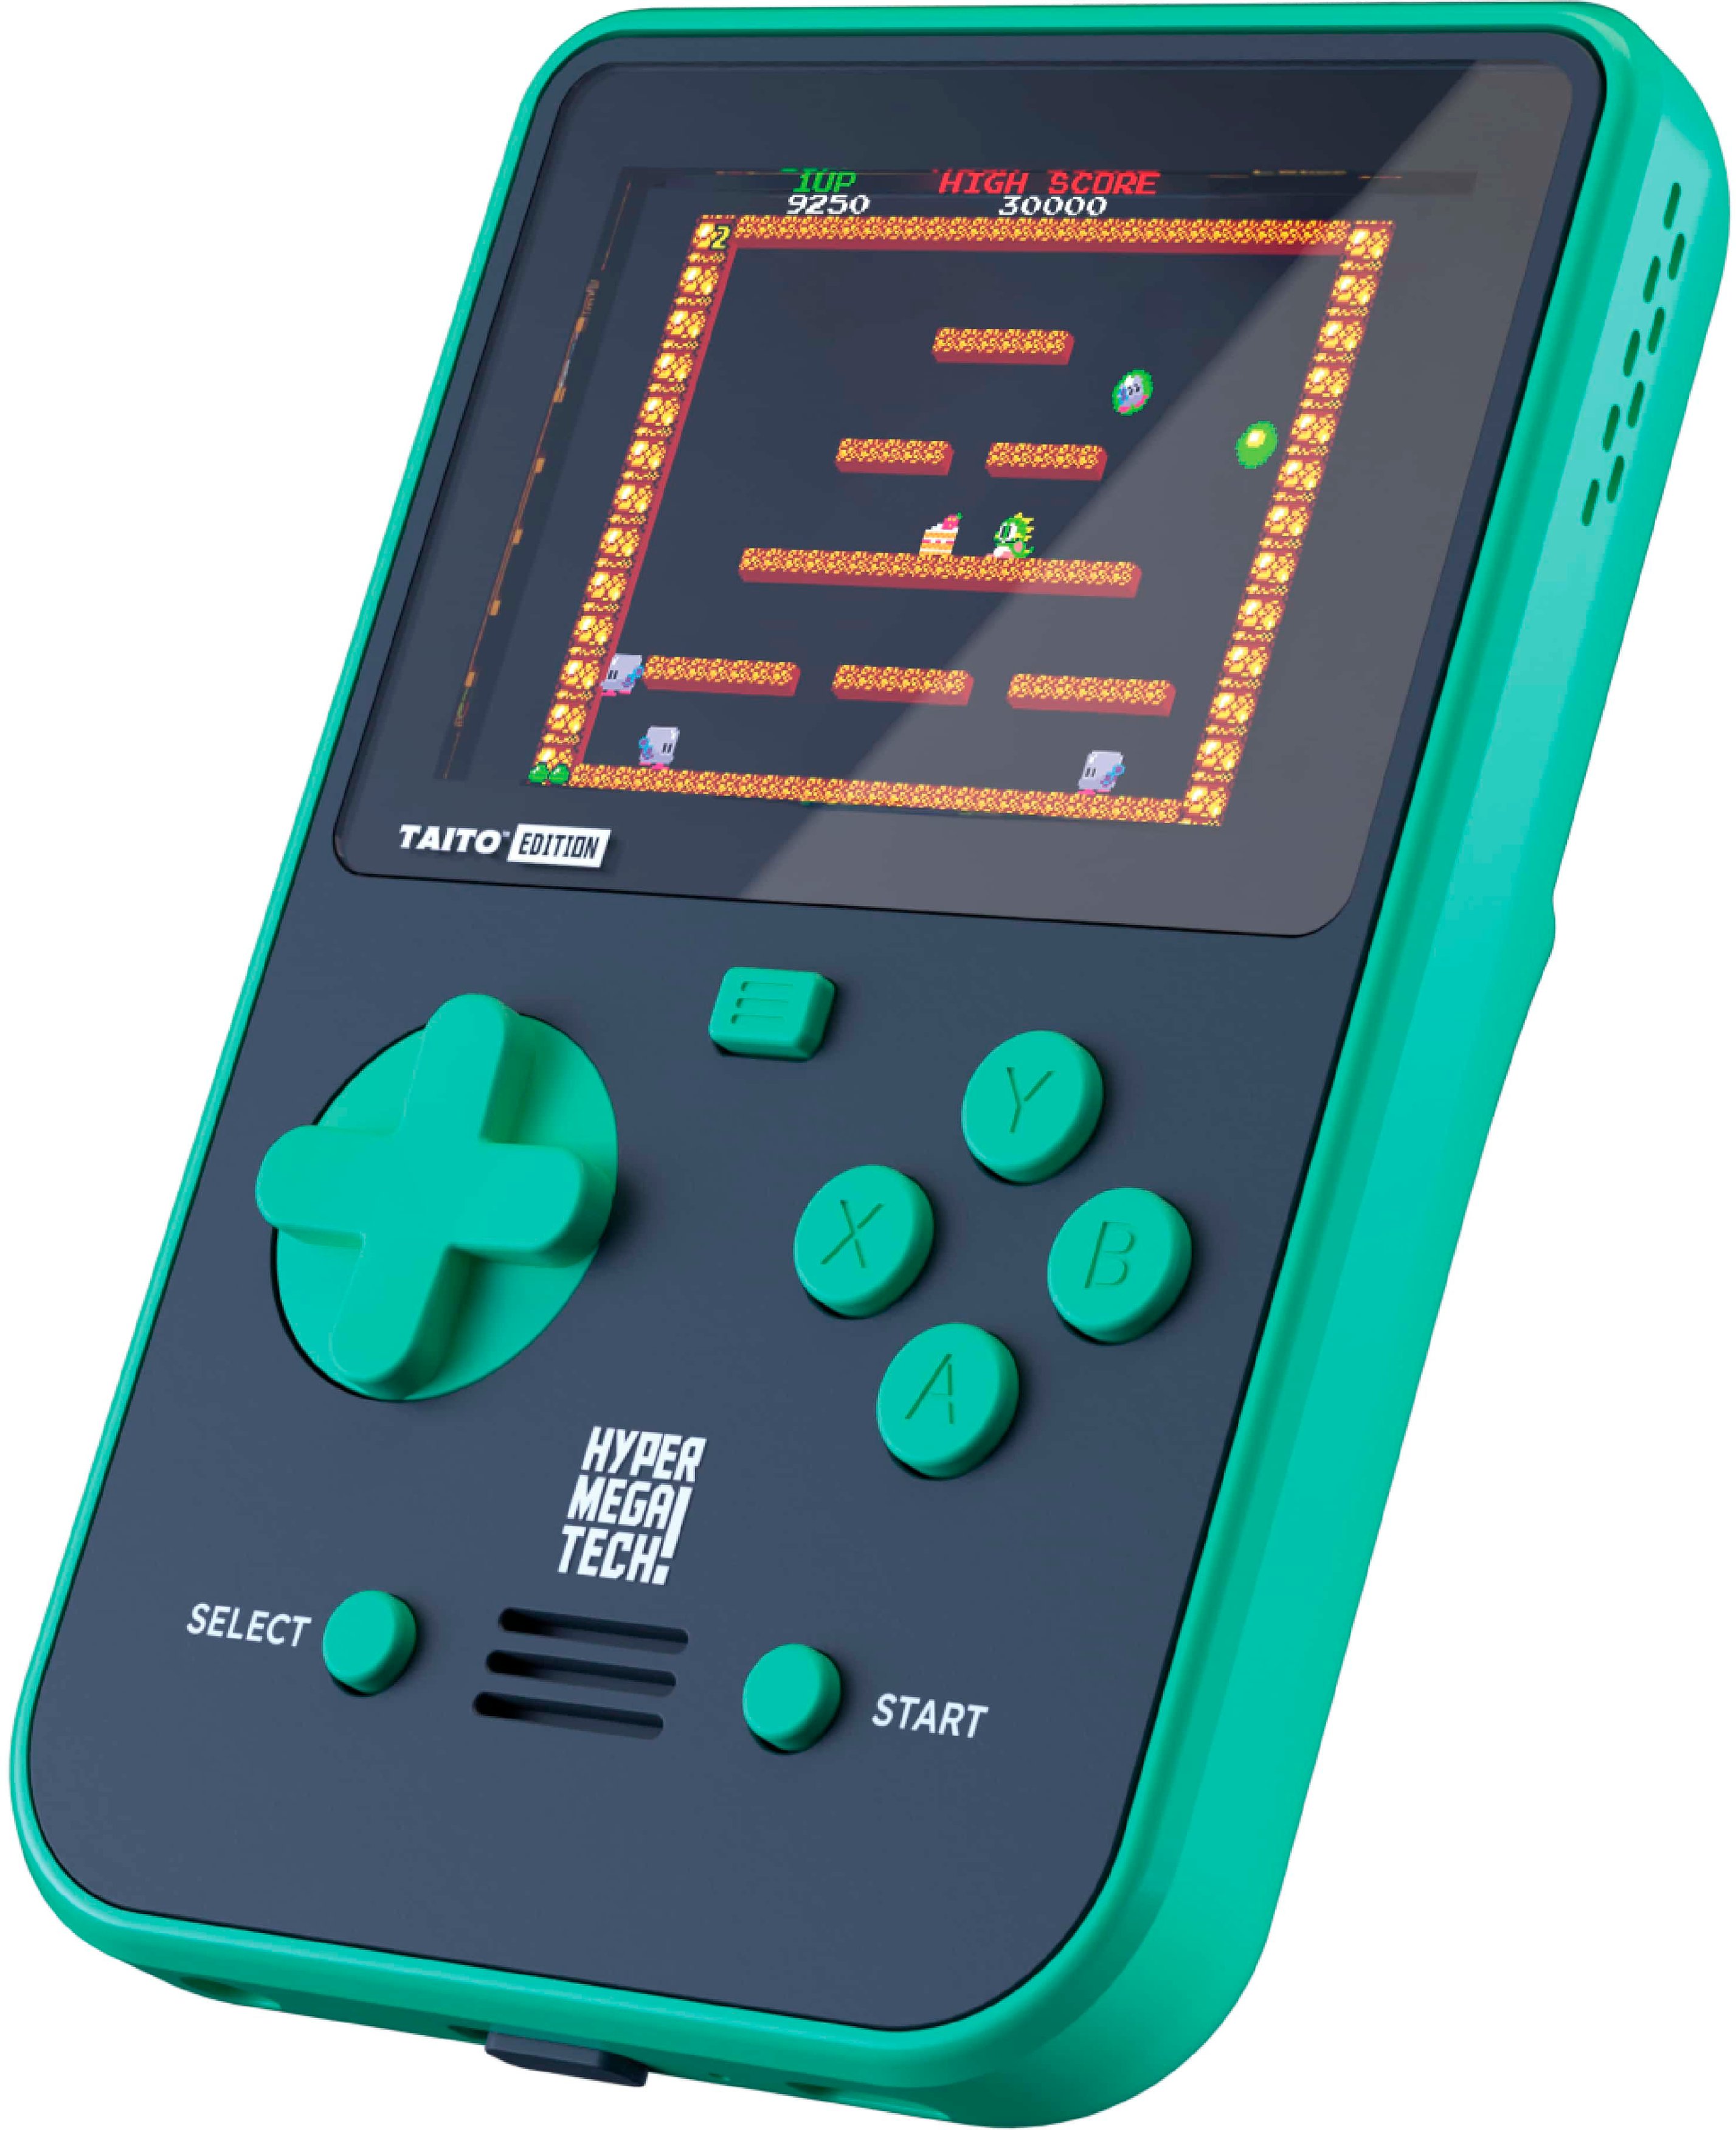 Back View: My Arcade - Galaga Pocket Player Pro - Green & Black